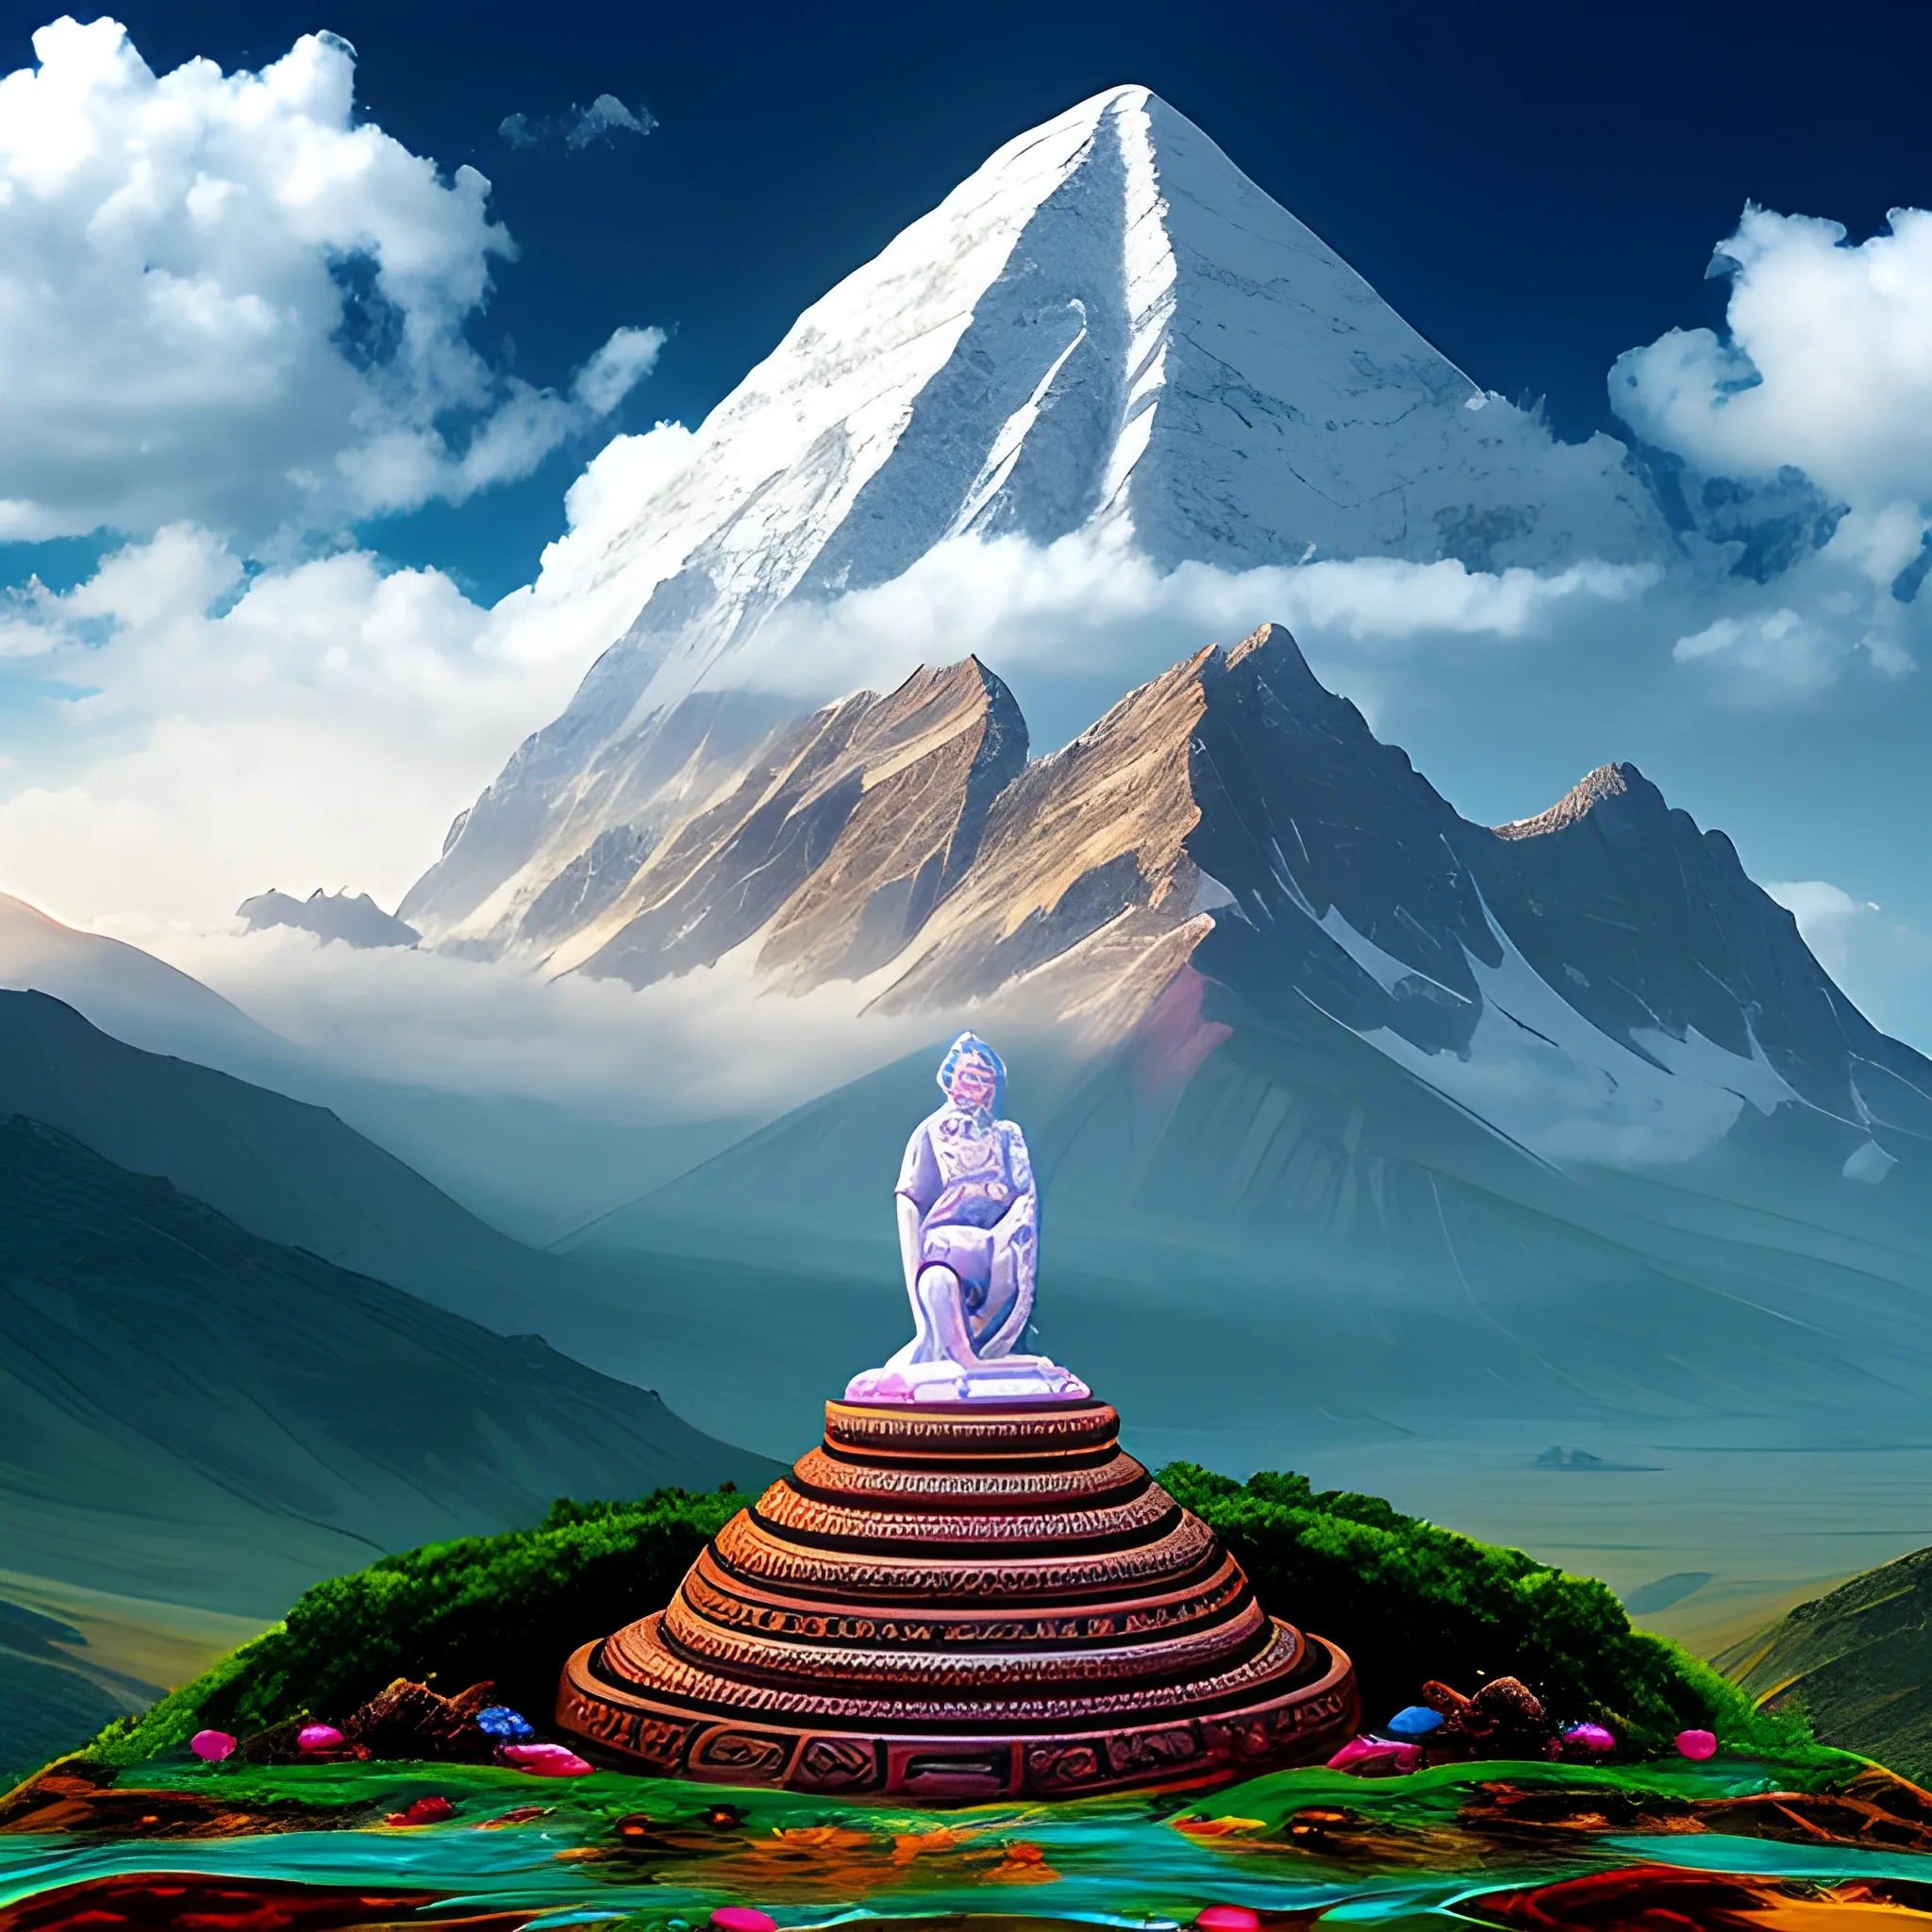 krishna-god 
mountin landscape,
athmospher, clouds, Trippy